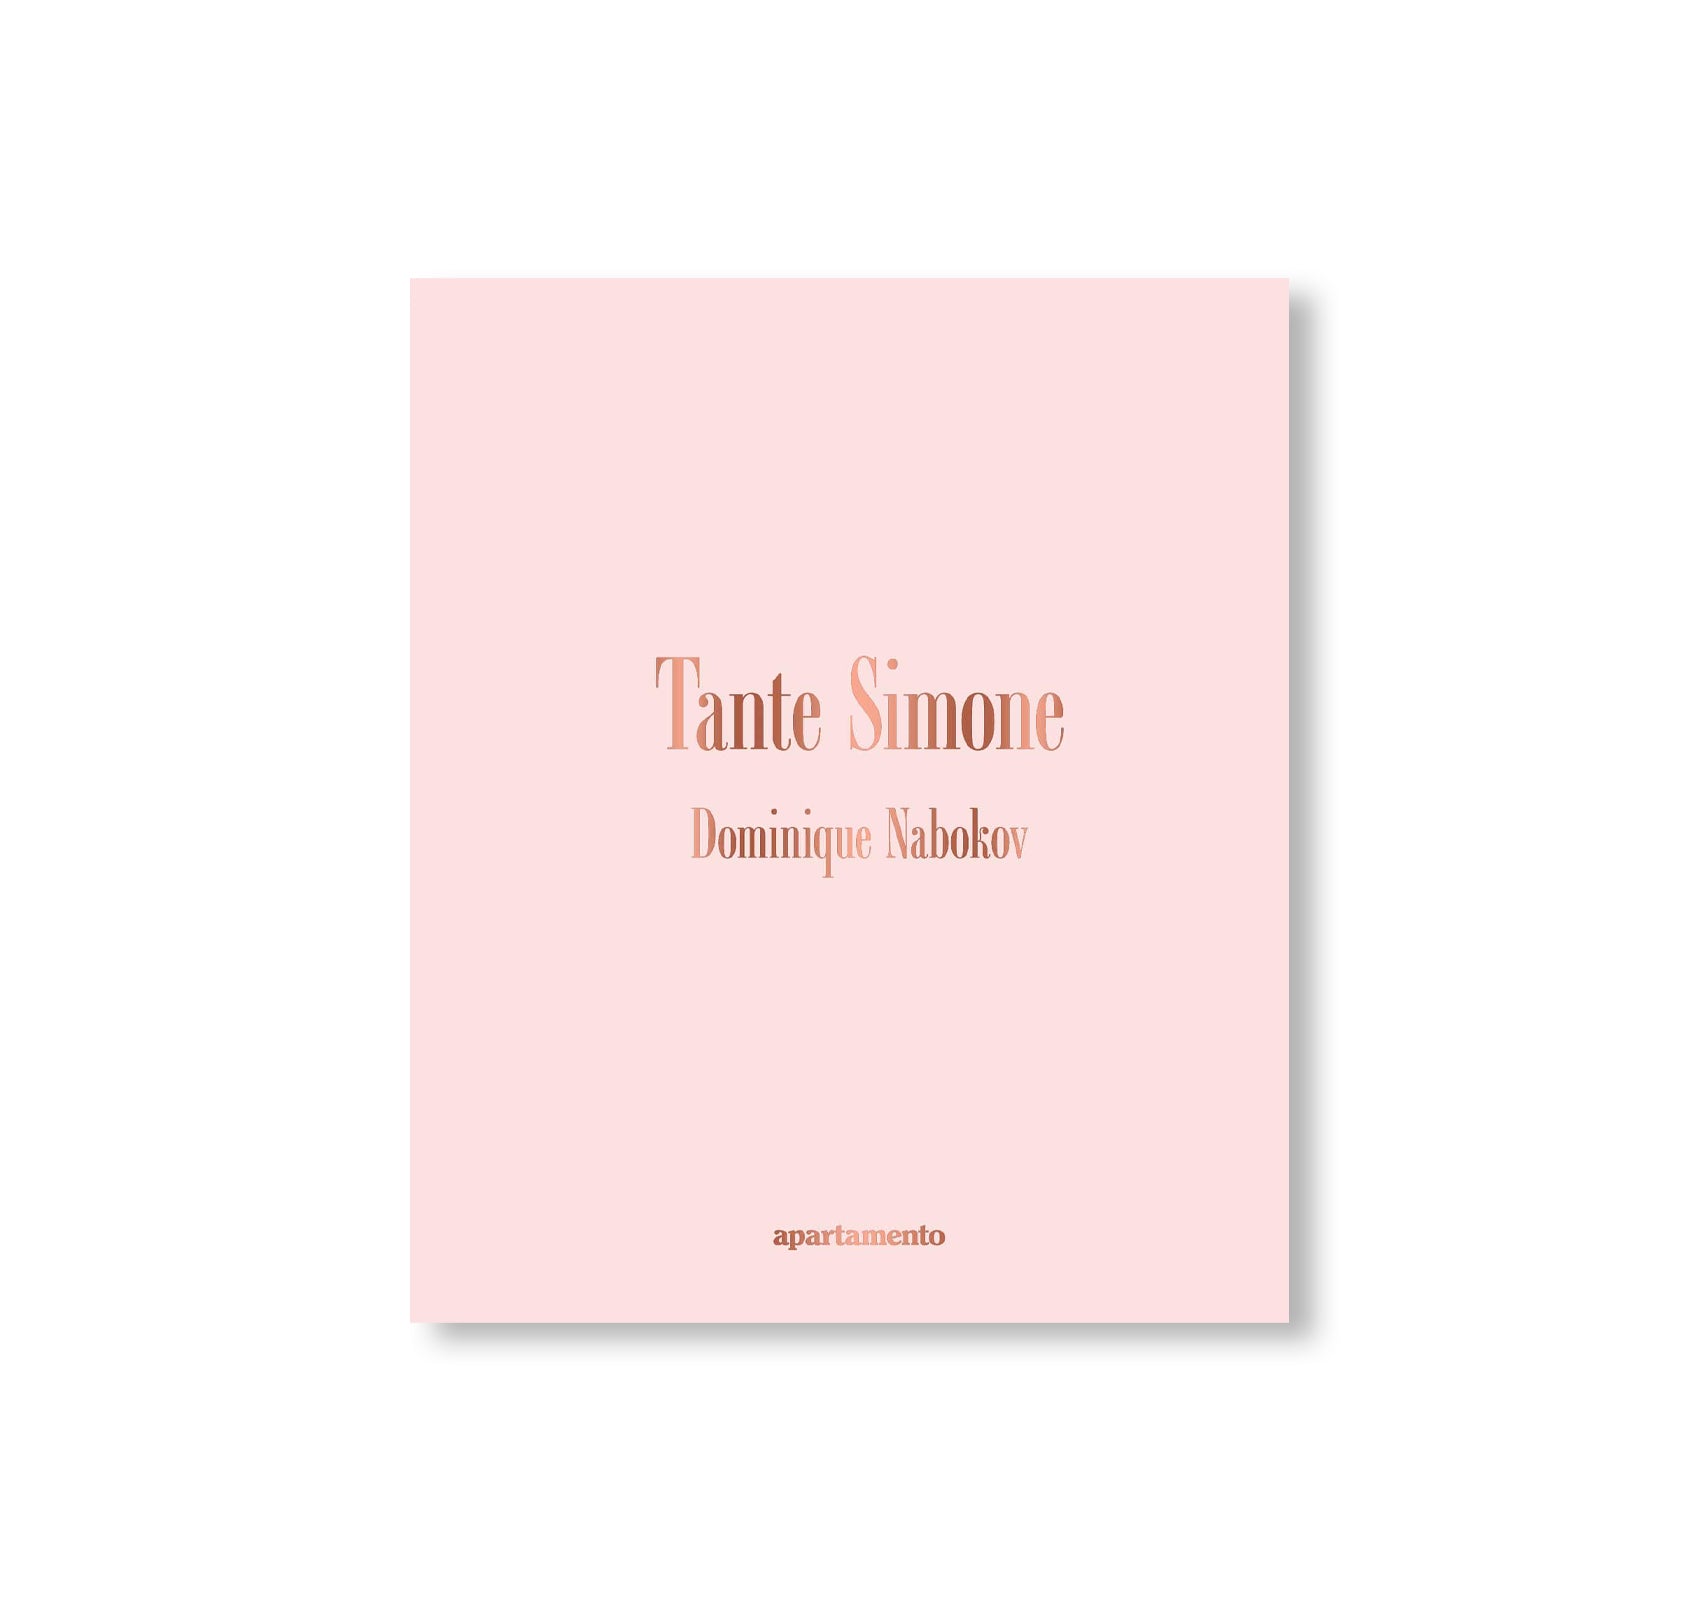 TANTE SIMONE by Dominique Nabokov